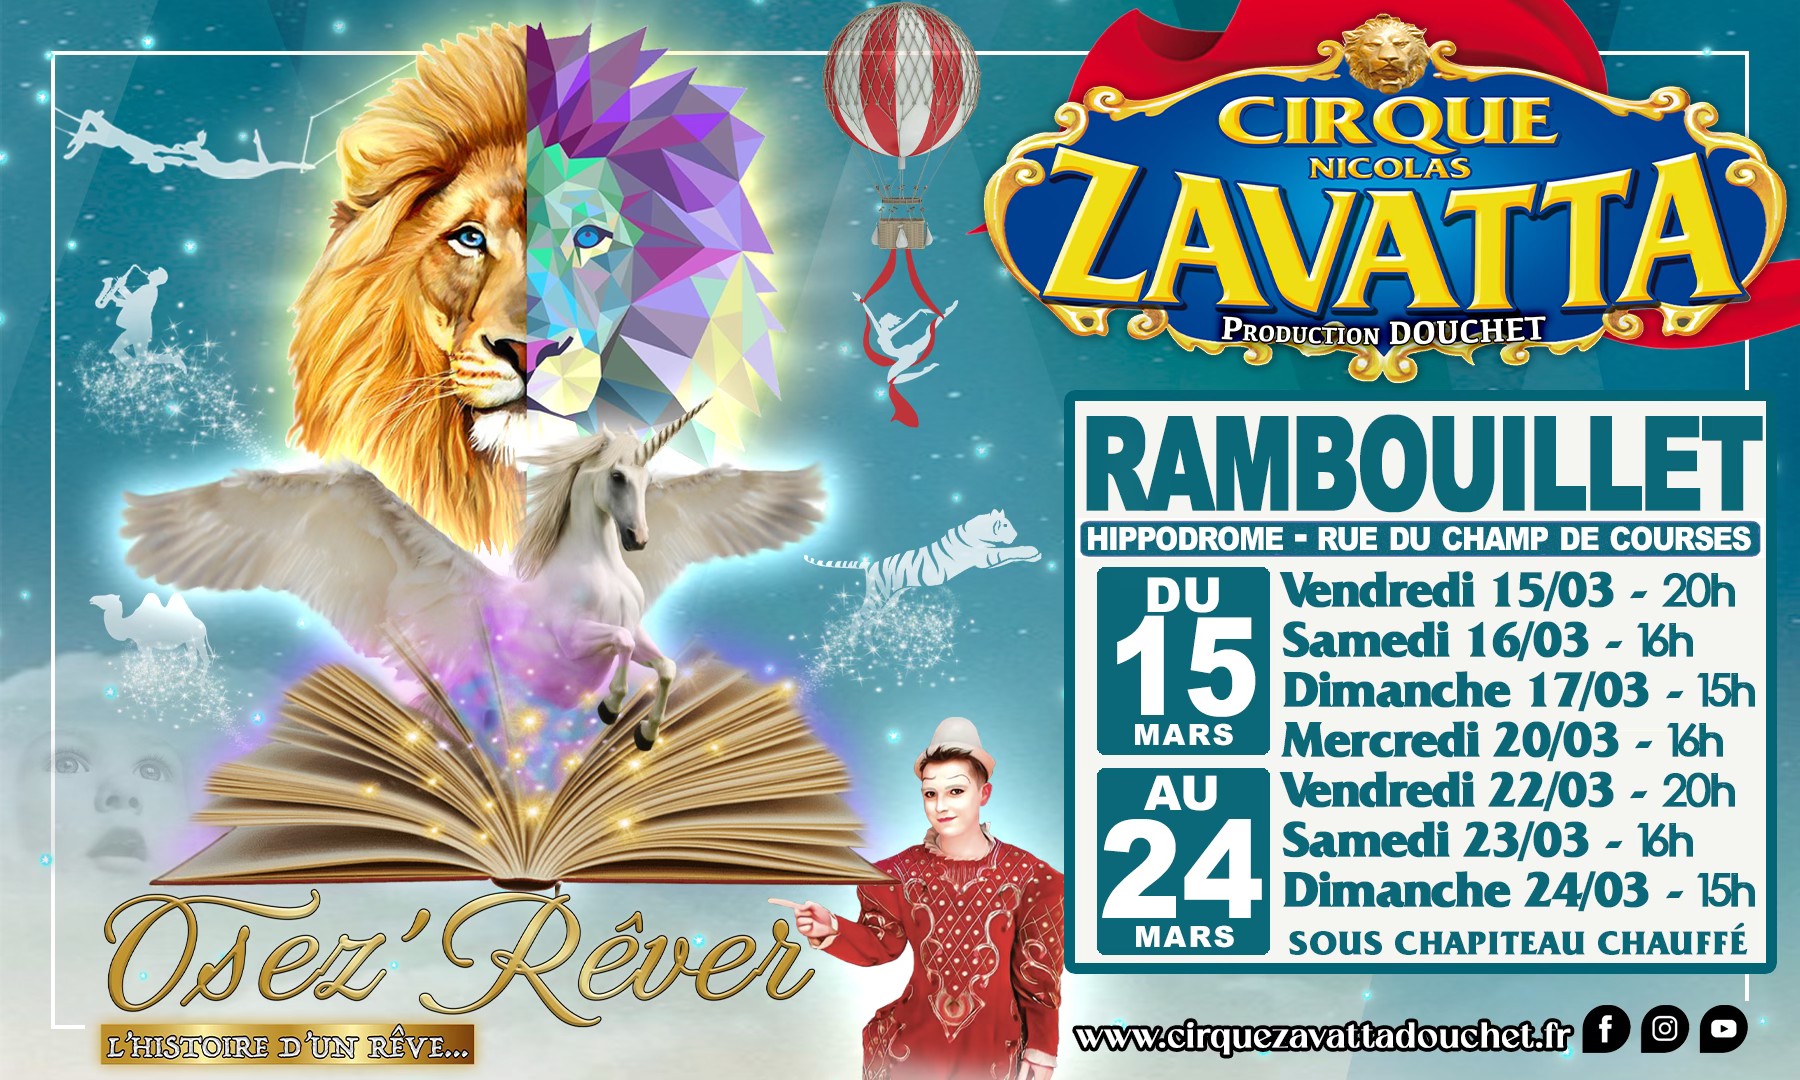 Circo Zavatta Douchet - Posto de Turismo de Rambouillet